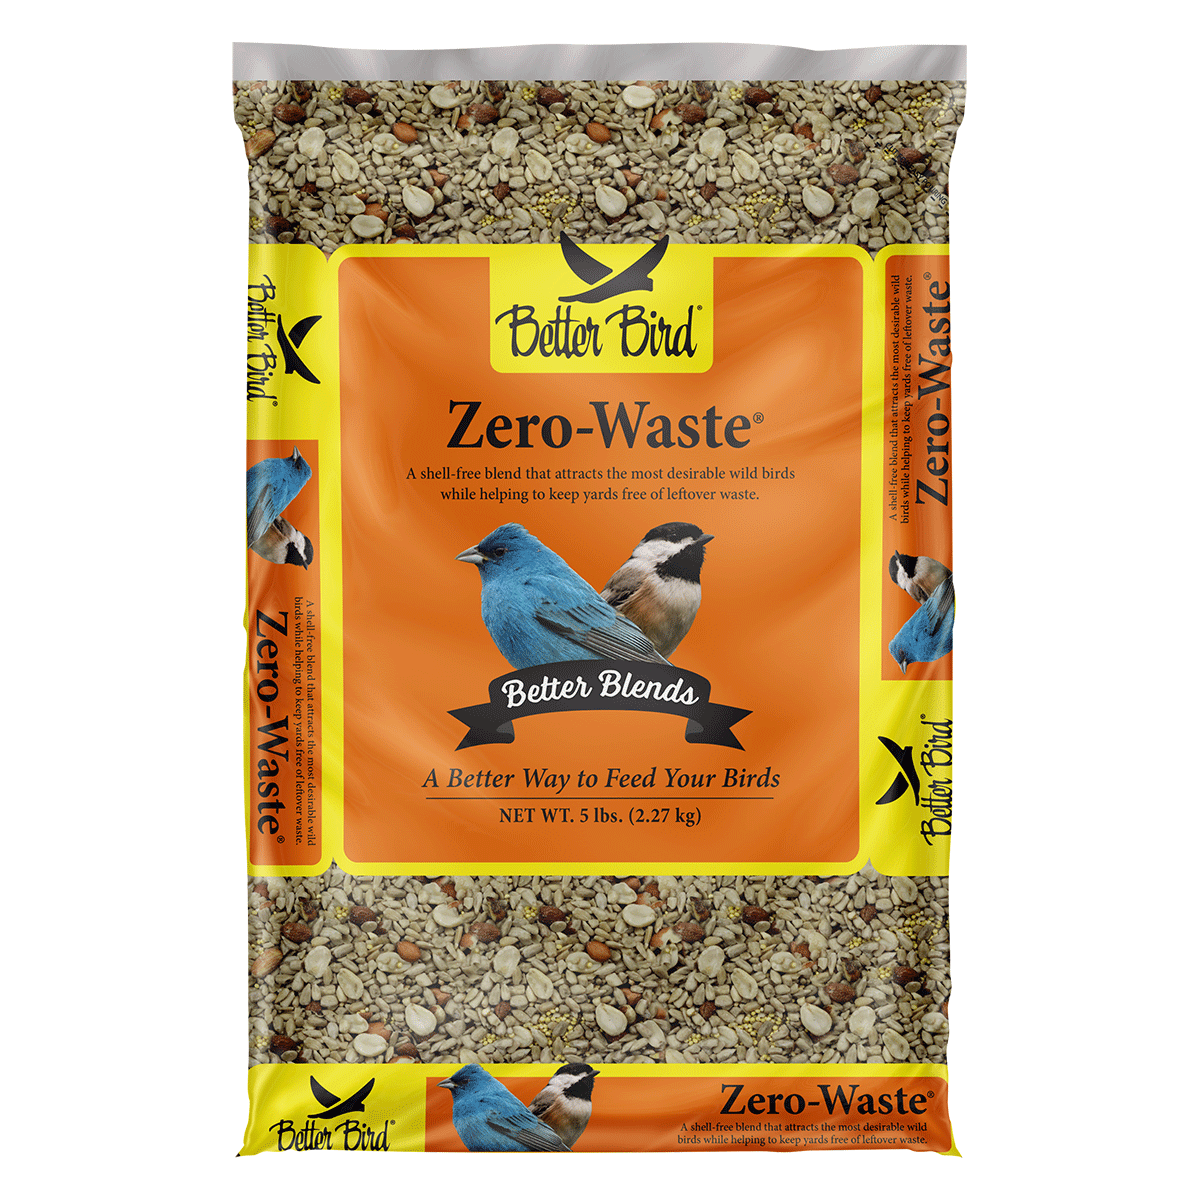 Better Bird Zero-Waste 5lb seed mix bag